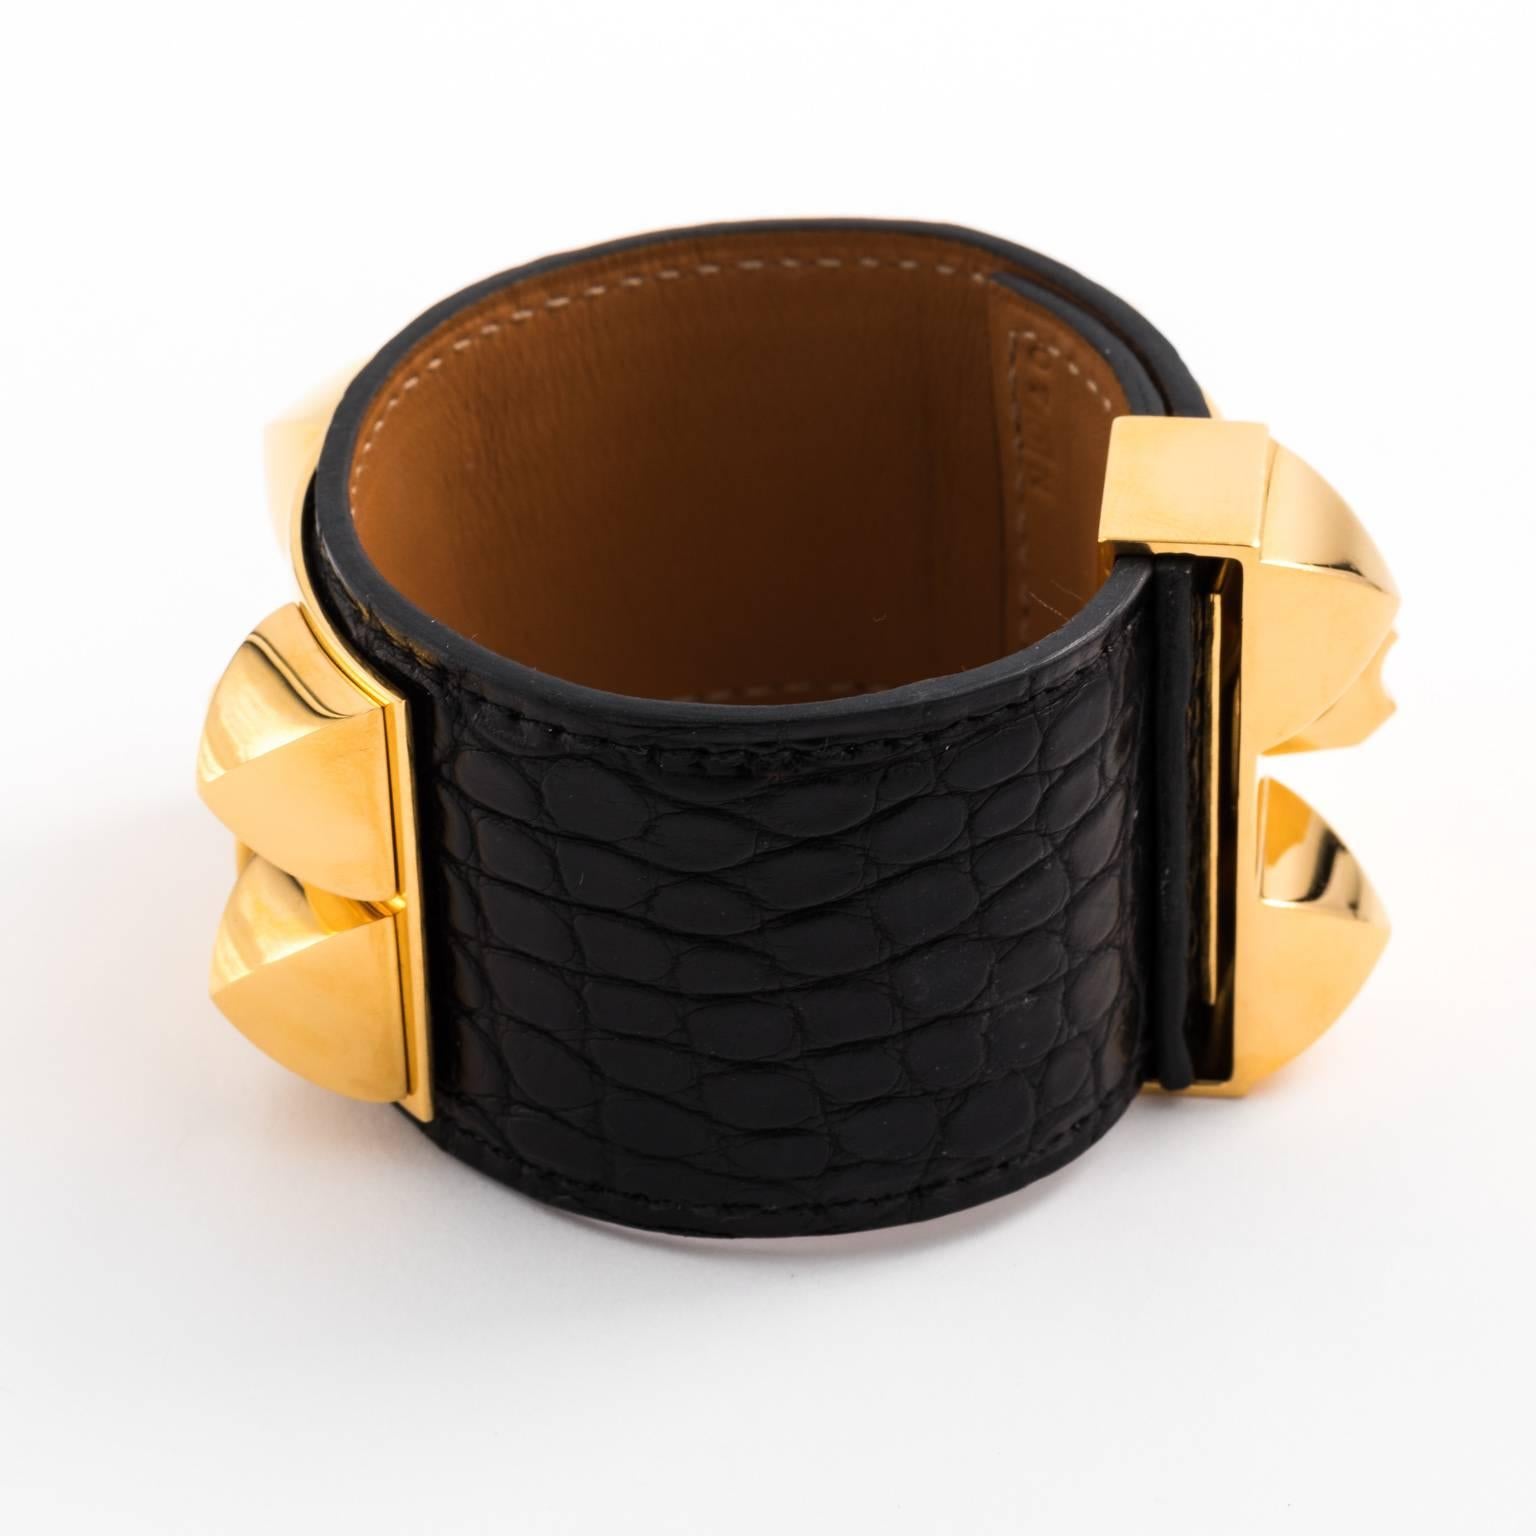 Contemporary Hermes Collier de Chien cuff bracelet that features a black alligator cuff with gold hardware. Size Medium.
